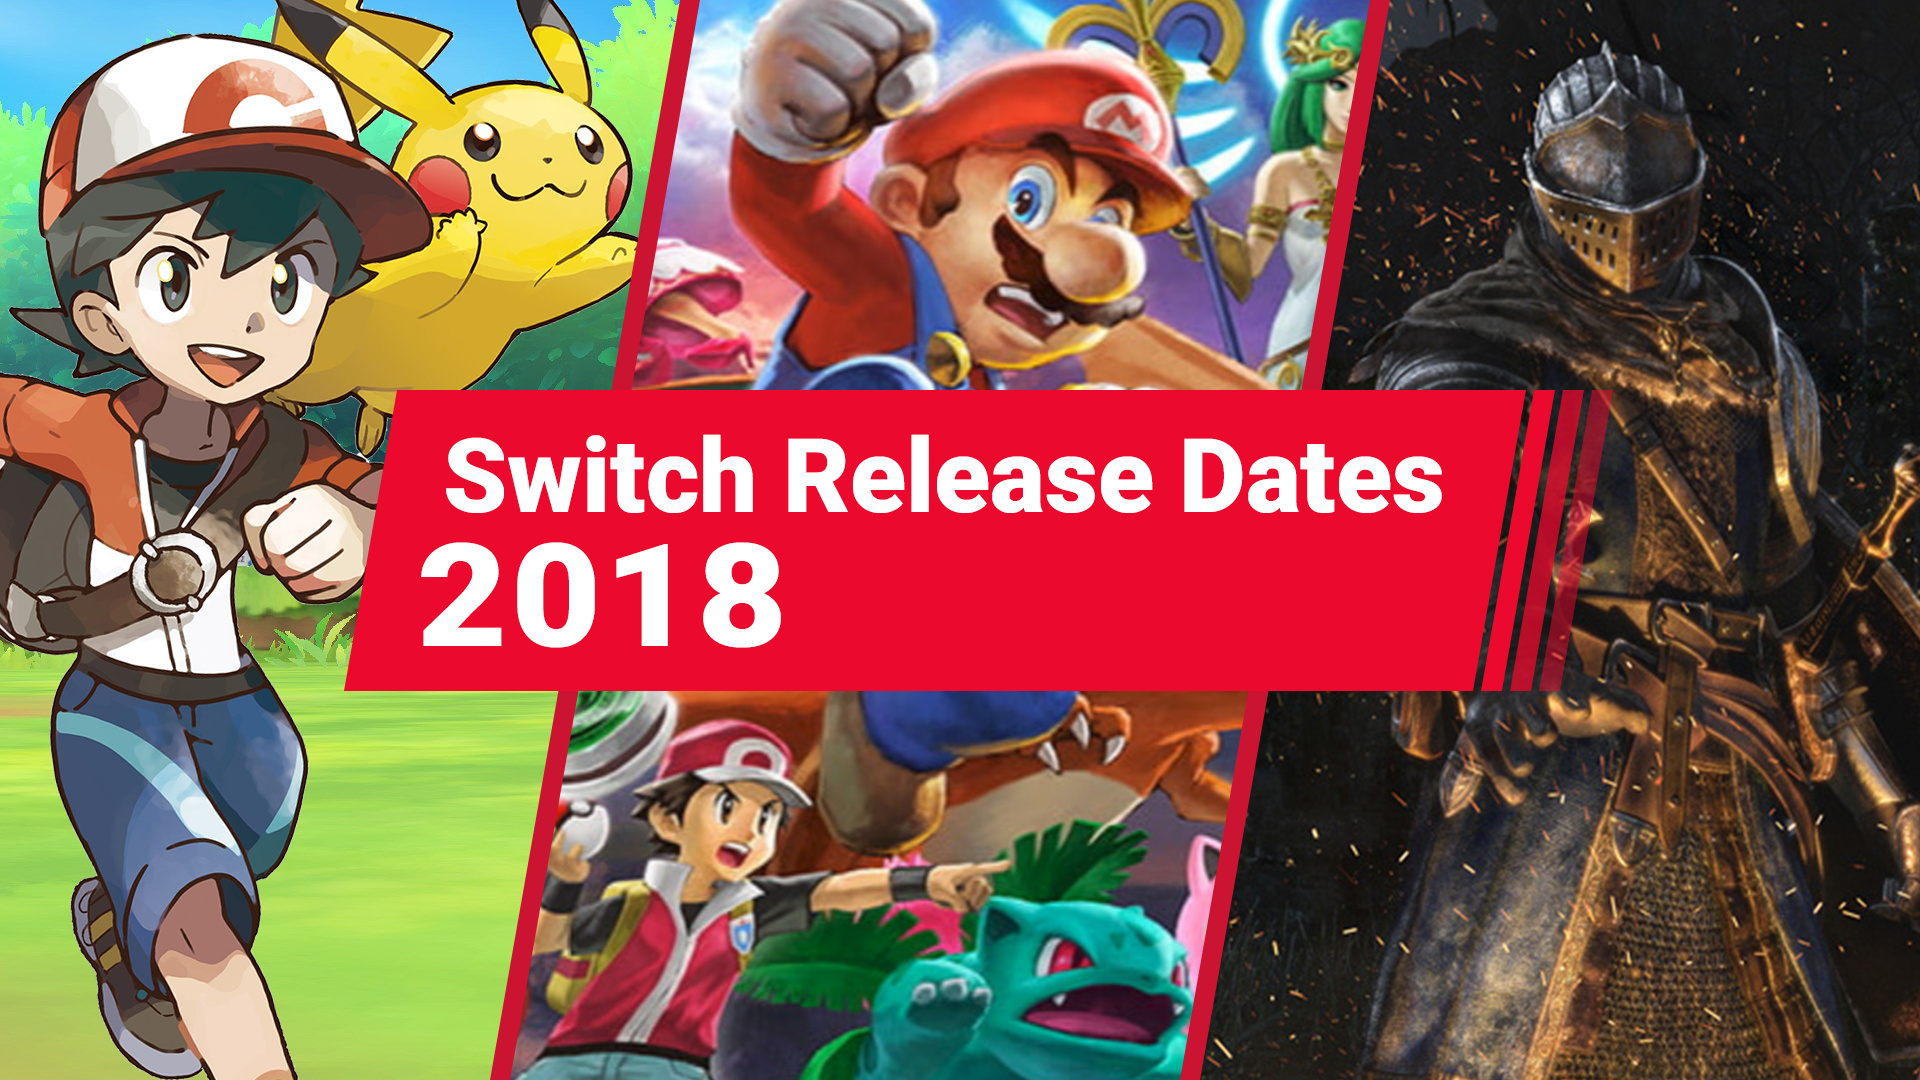 New Nintendo Switch Games Releasing In 2018 Guide Nintendo Life